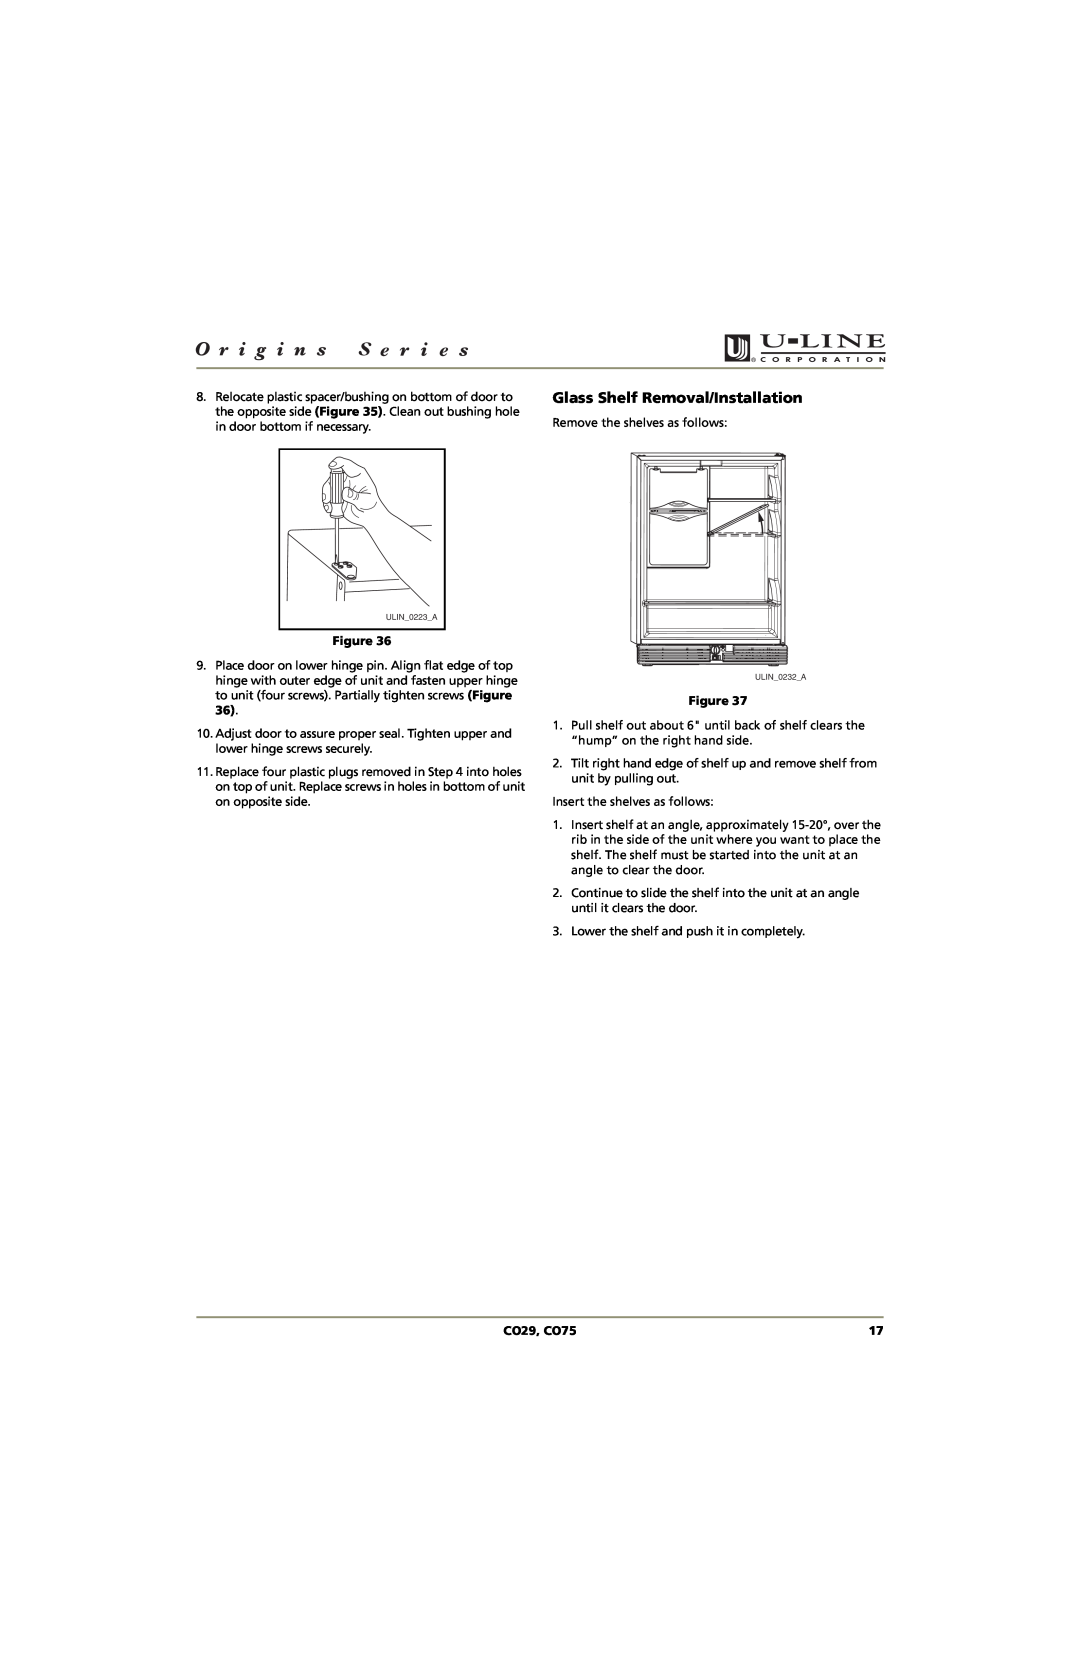 U-Line manual Glass Shelf Removal/Installation, CO29, CO75 